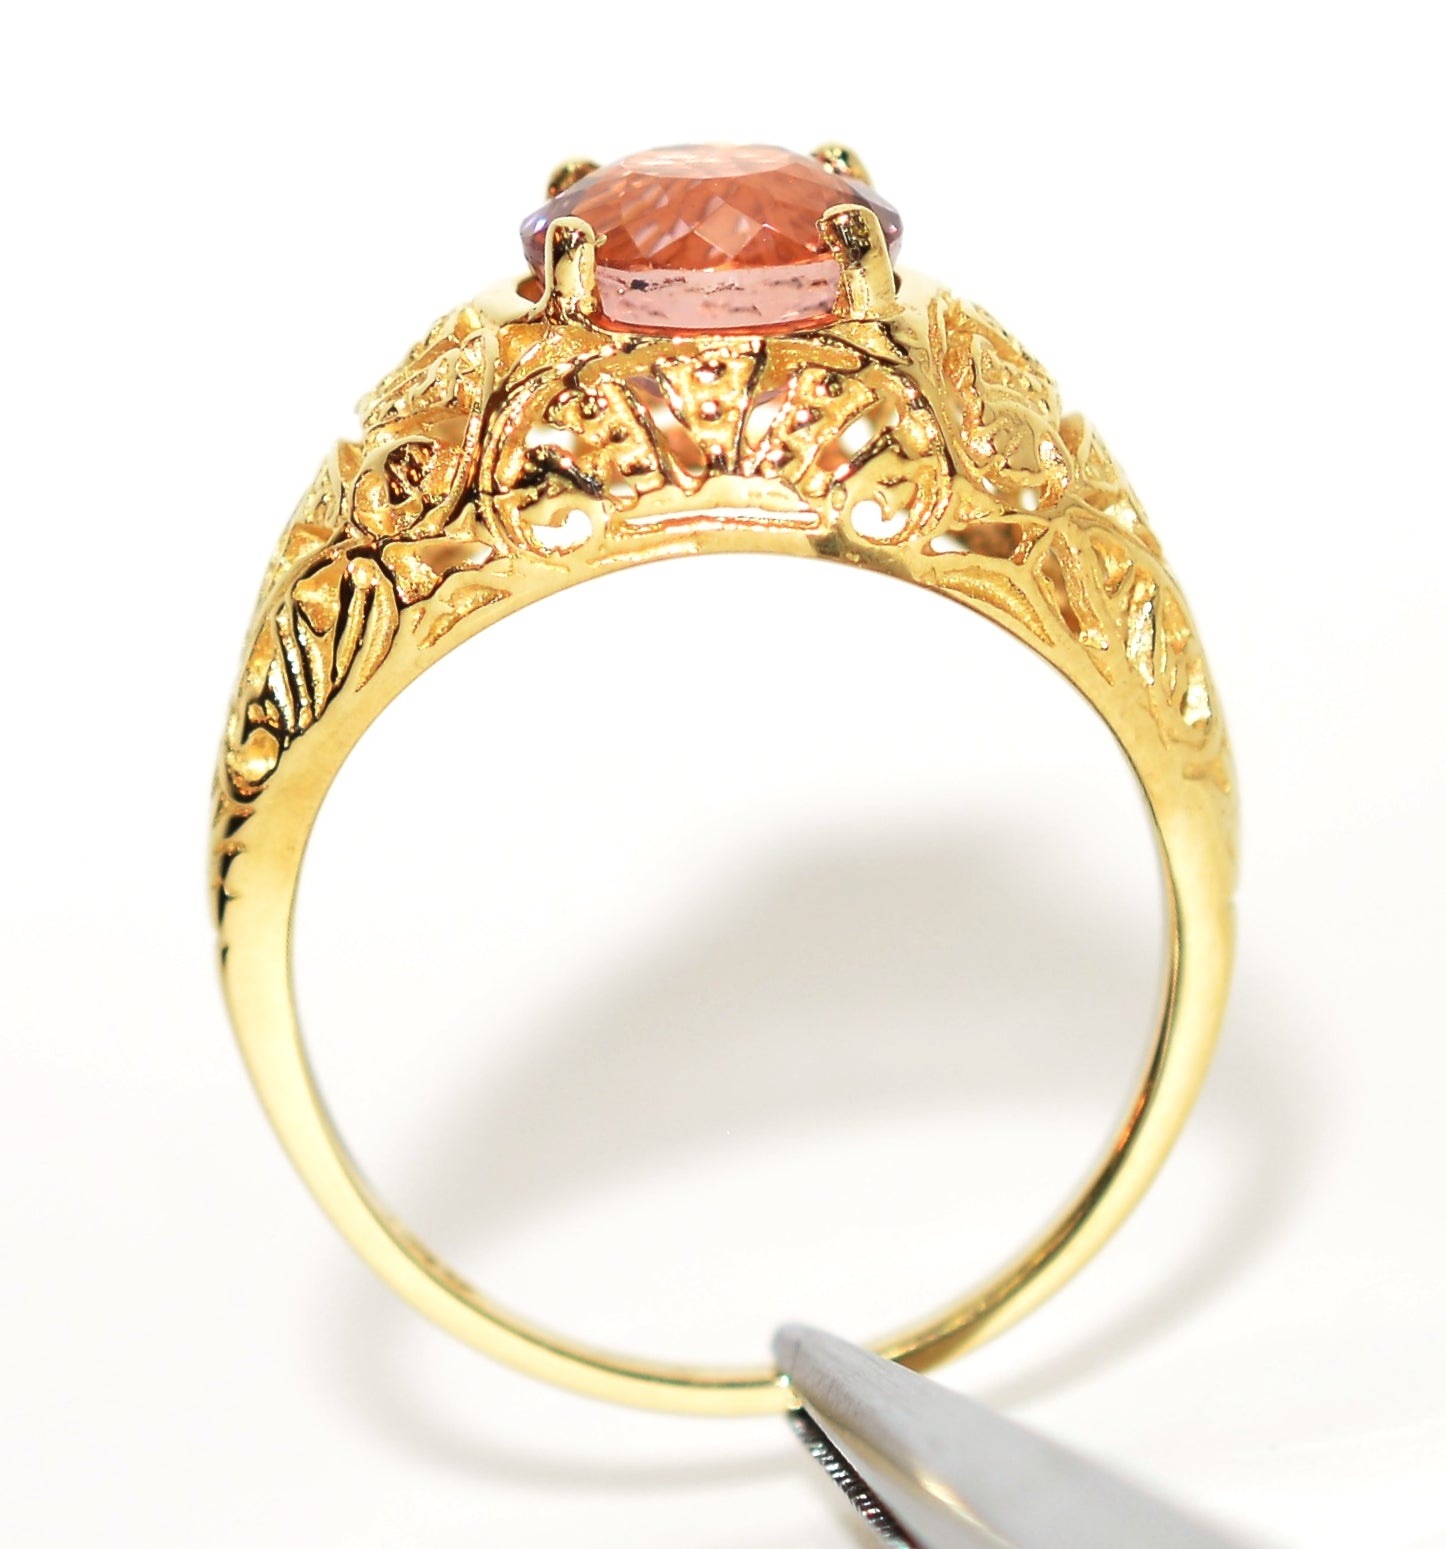 Natural Pink Tourmaline Ring 10K Solid Gold 1.96ct Solitaire Ring Birthstone Ring Cocktail Ring Filigree Ring Pink Ring Vintage Ring Estate